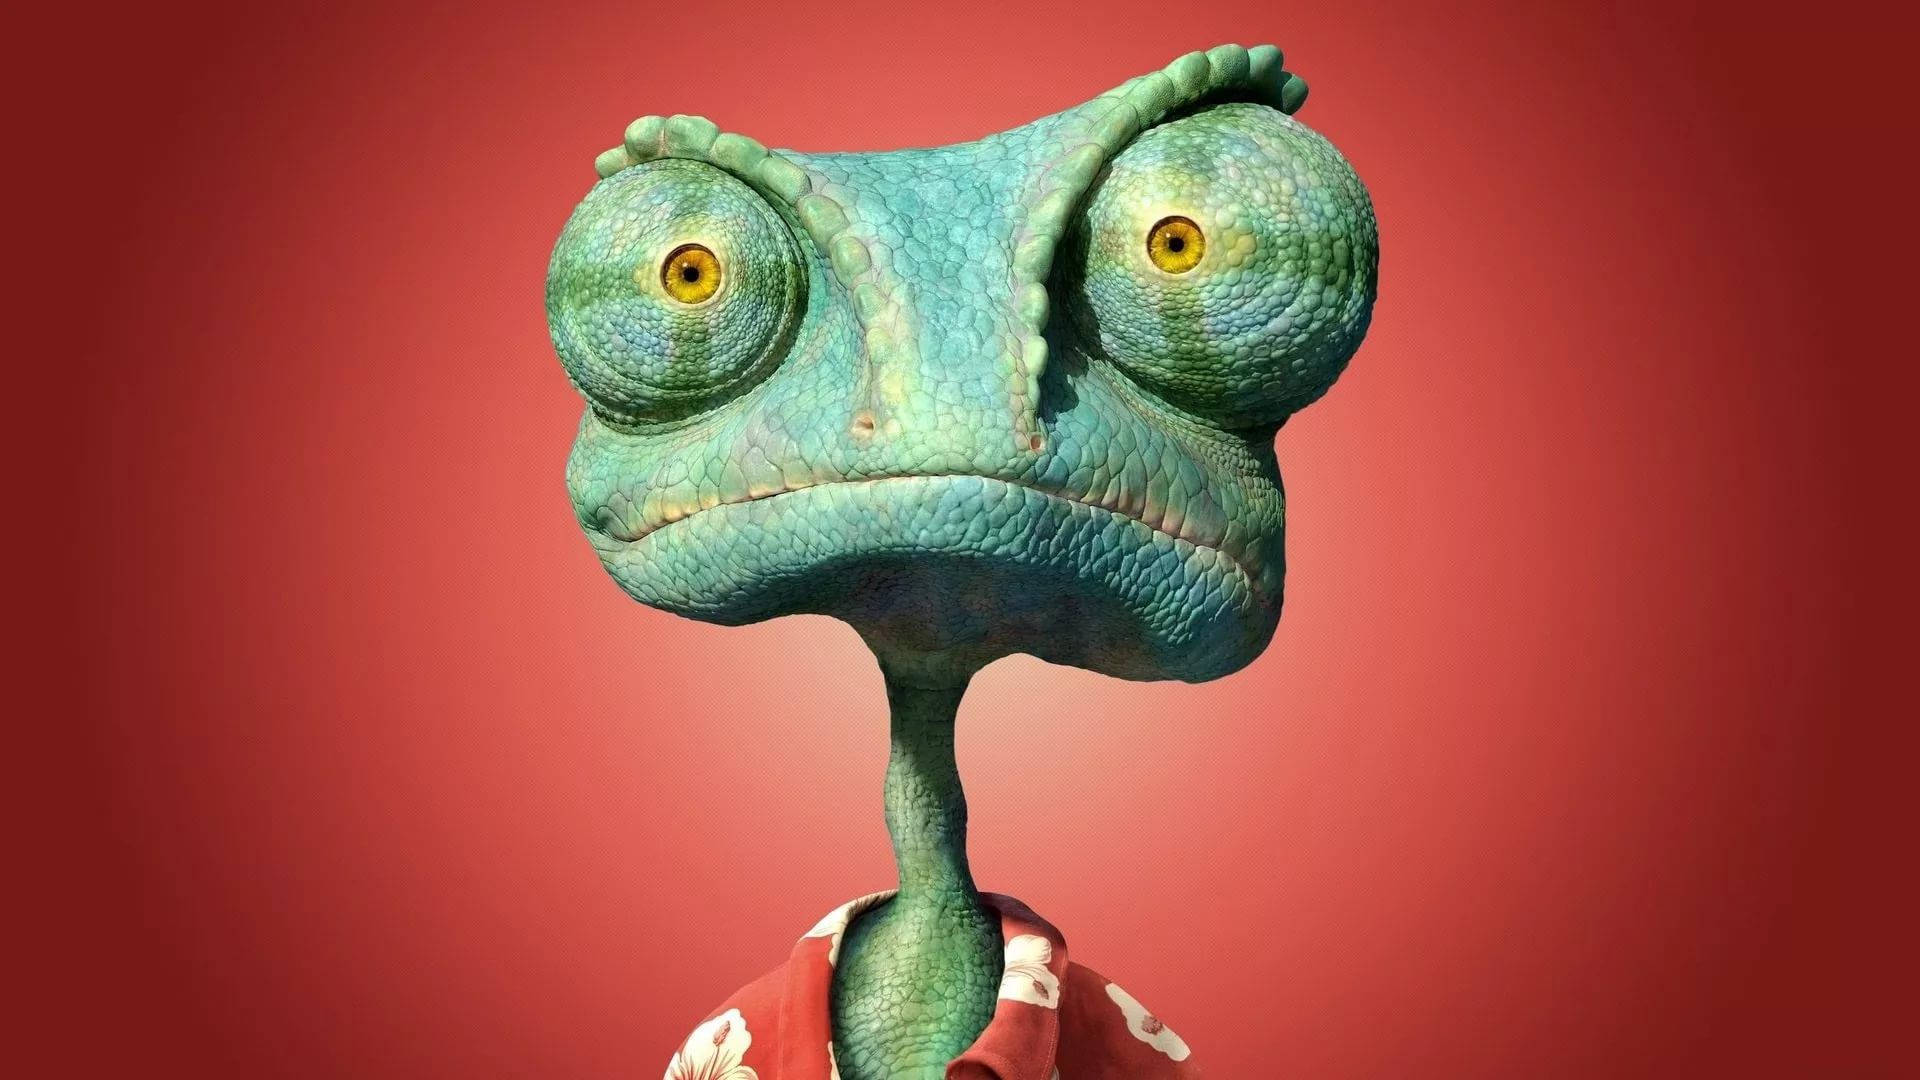 Reptile rango meme with big eyes and bubblegum colors, funny animal. 